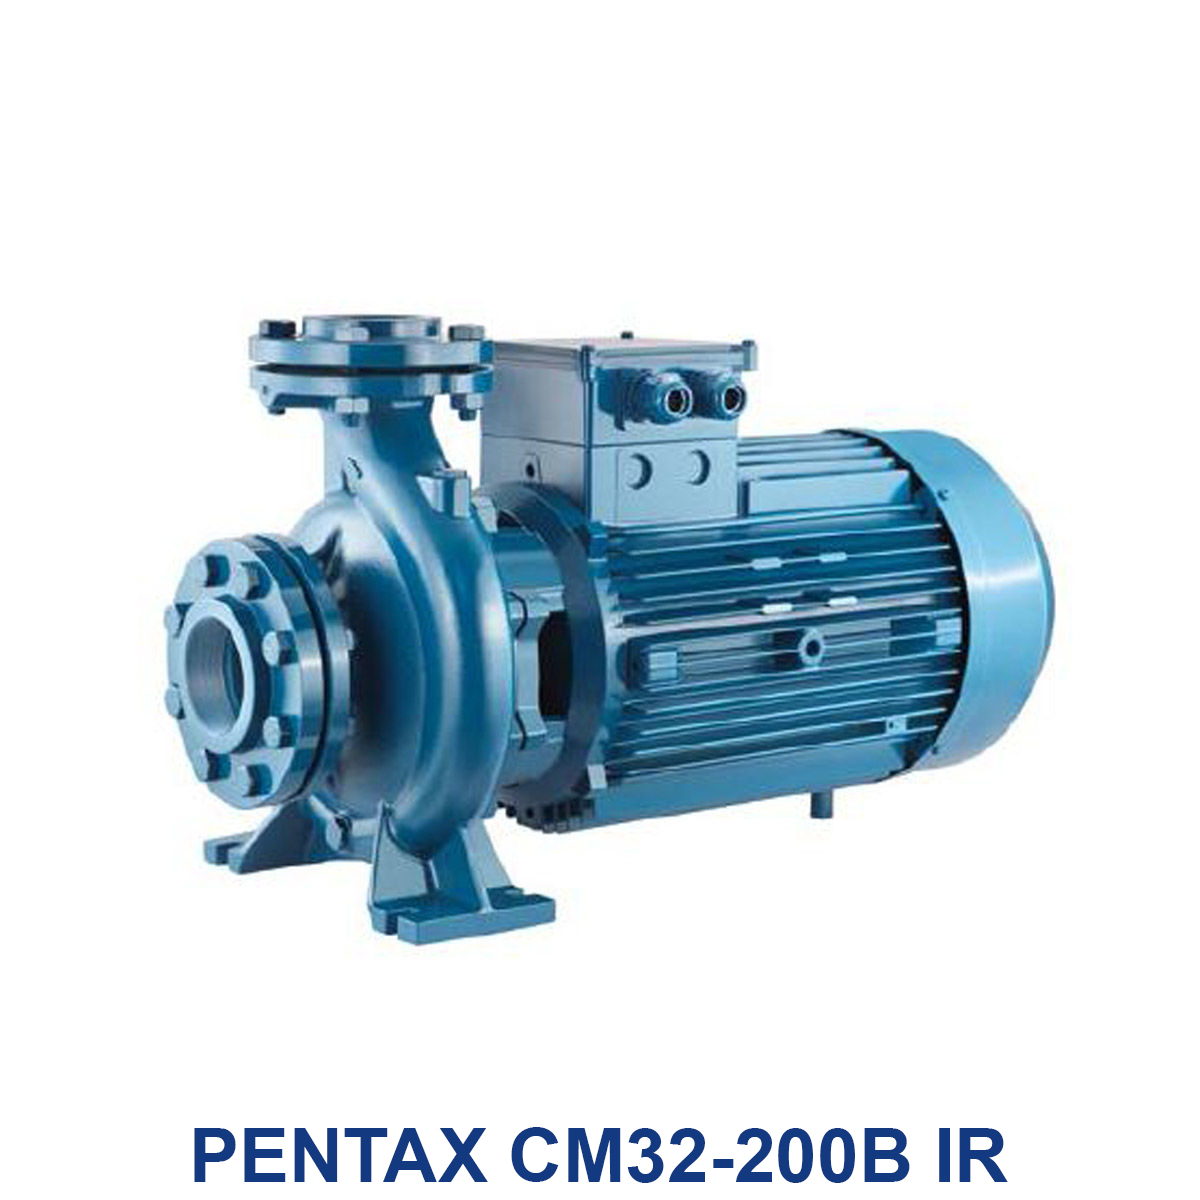 PENTAX-CM32-200B-IR